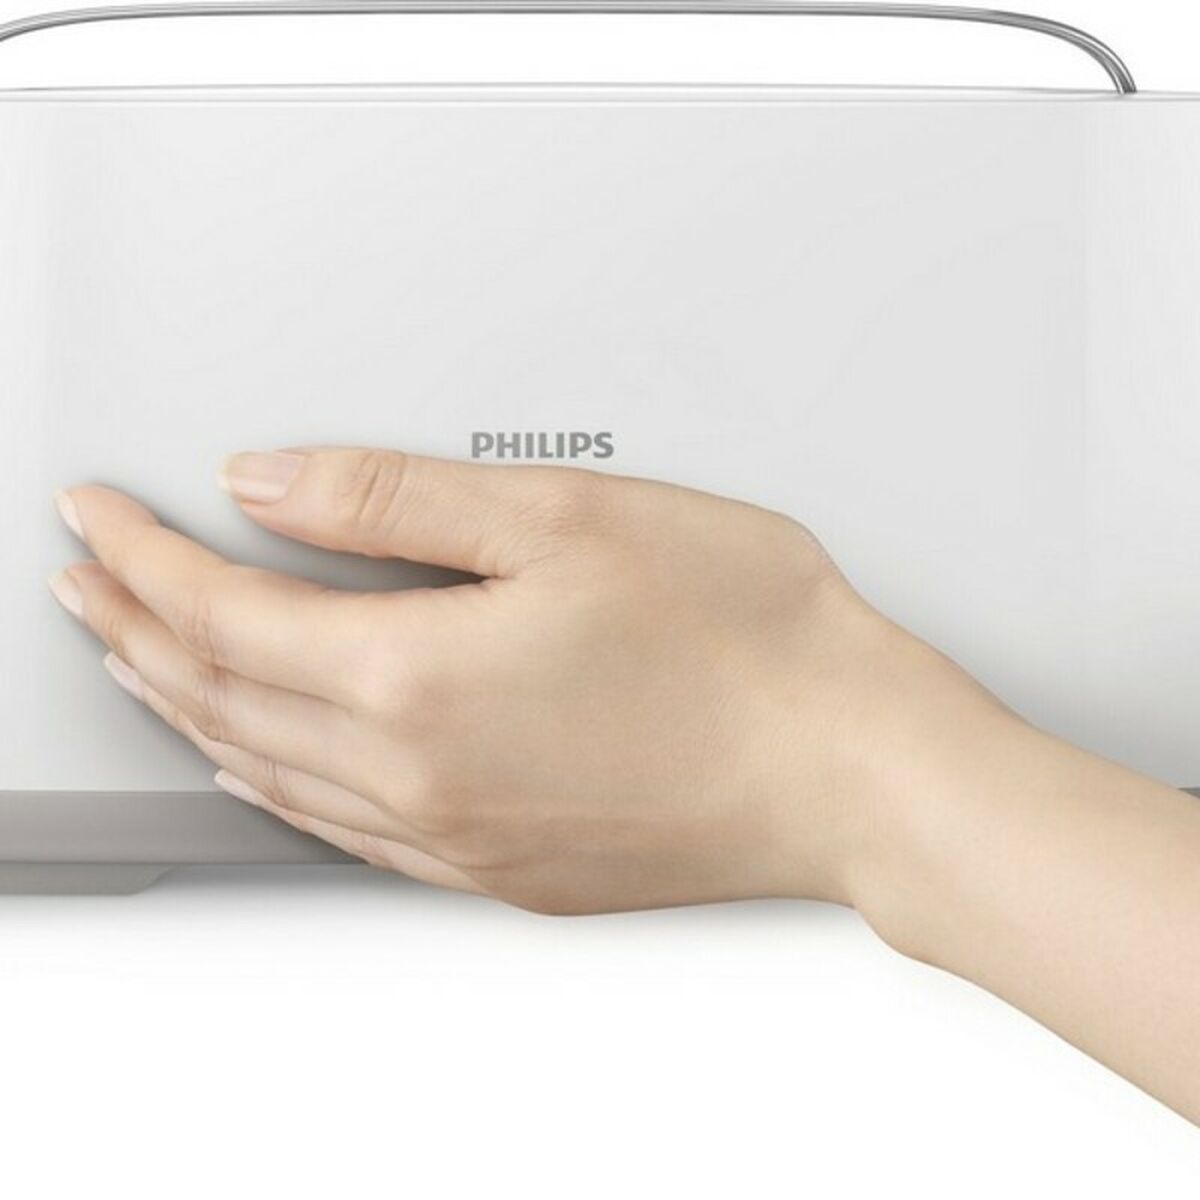 Toaster Philips HD2590/00 Weiß 1030 W - CA International  